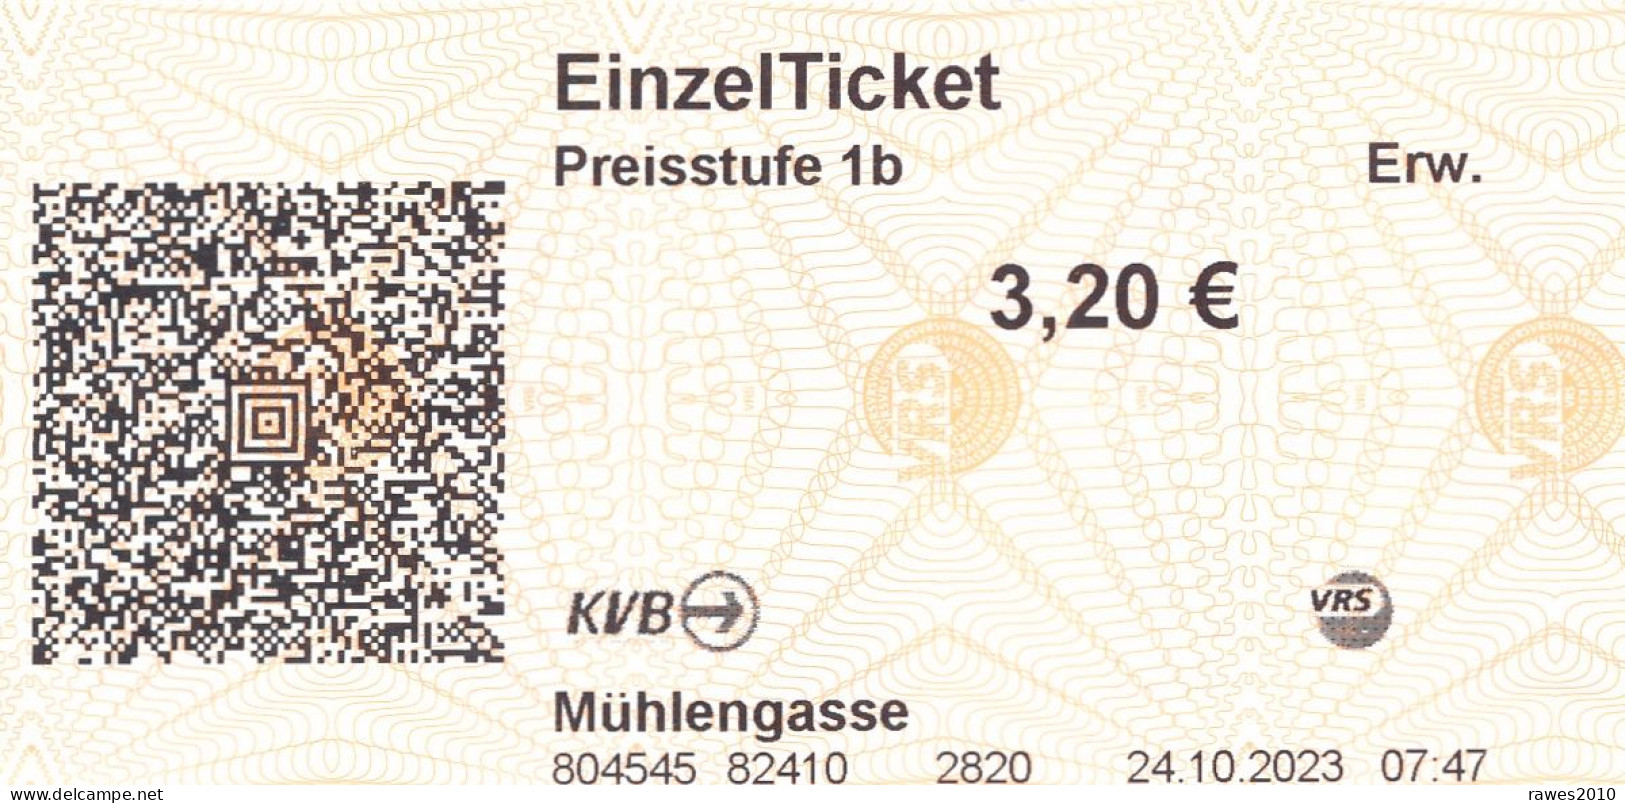 BRD Köln / Frechen EinzelTicket Preisstufe 1b 3,20 € Strassenbahn 2023 KVB Mühlengasse - Europe